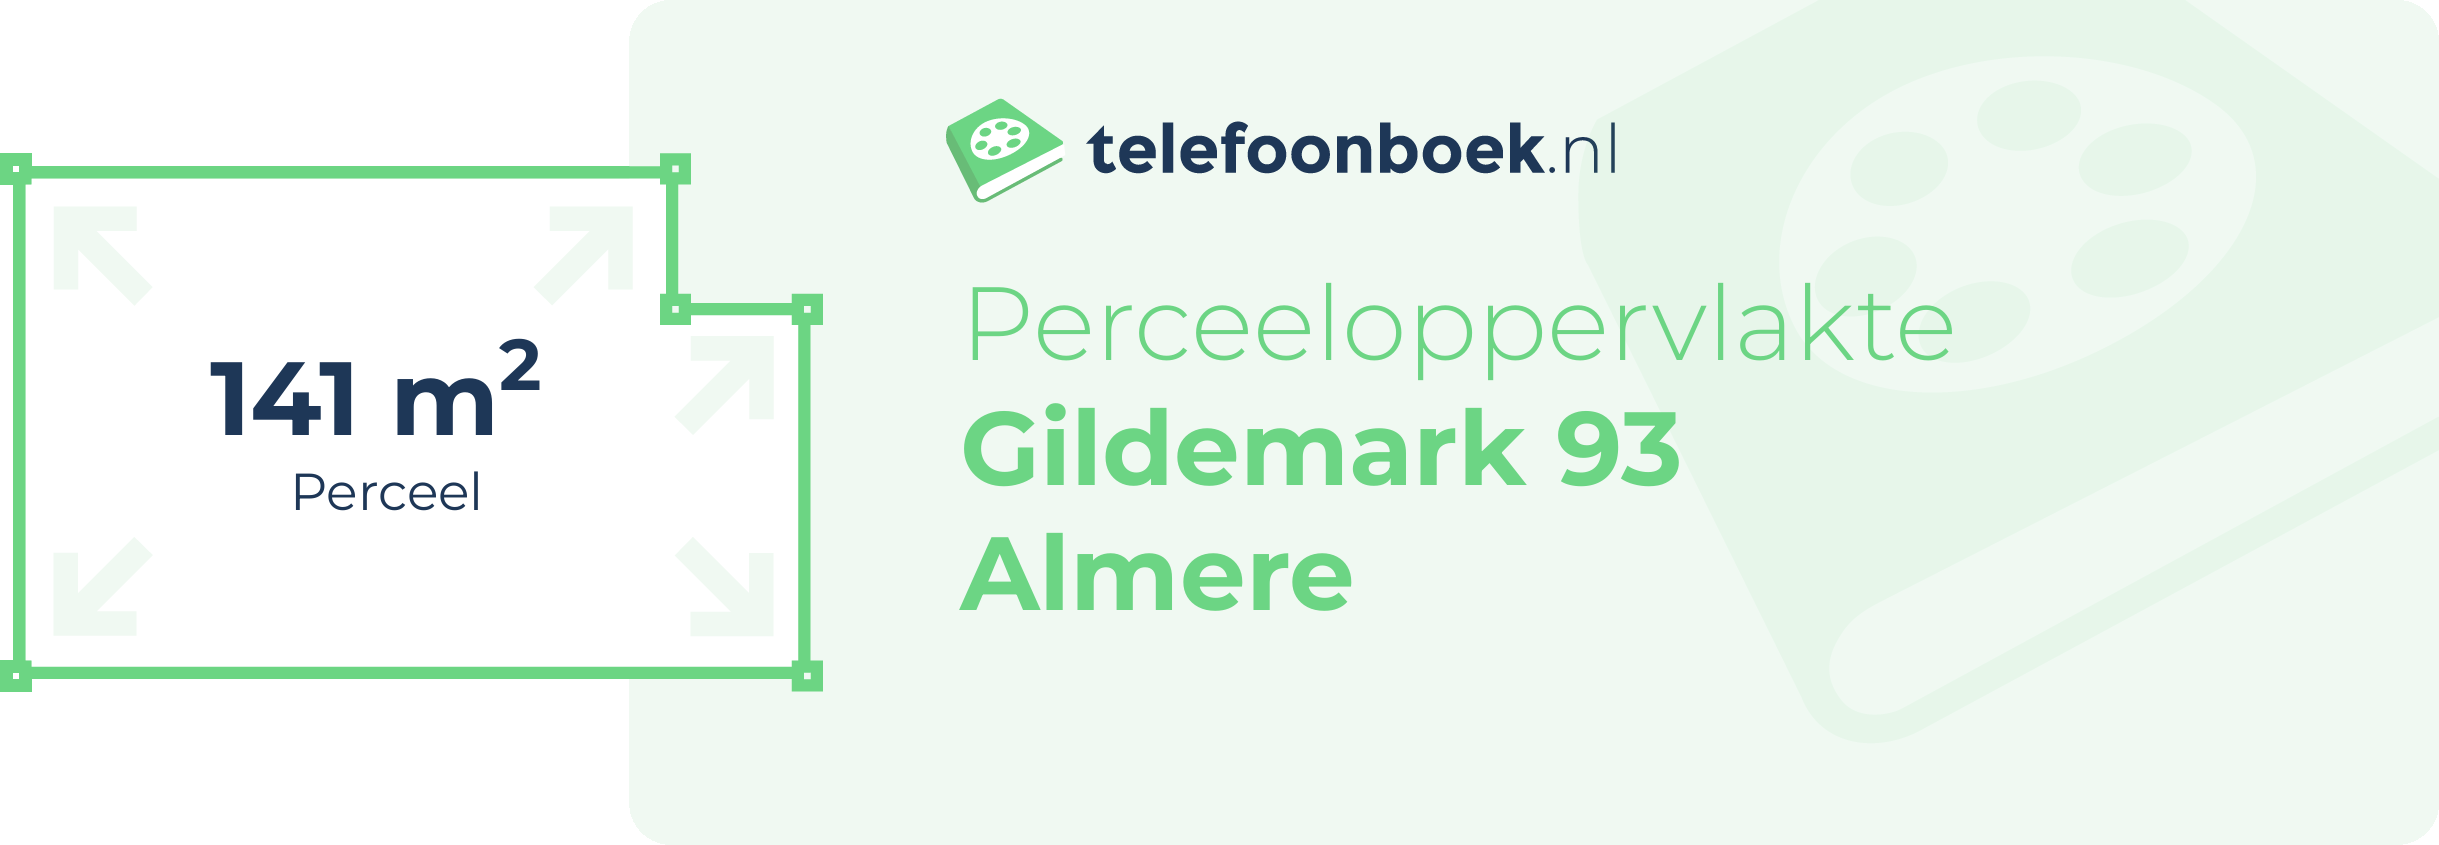 Perceeloppervlakte Gildemark 93 Almere